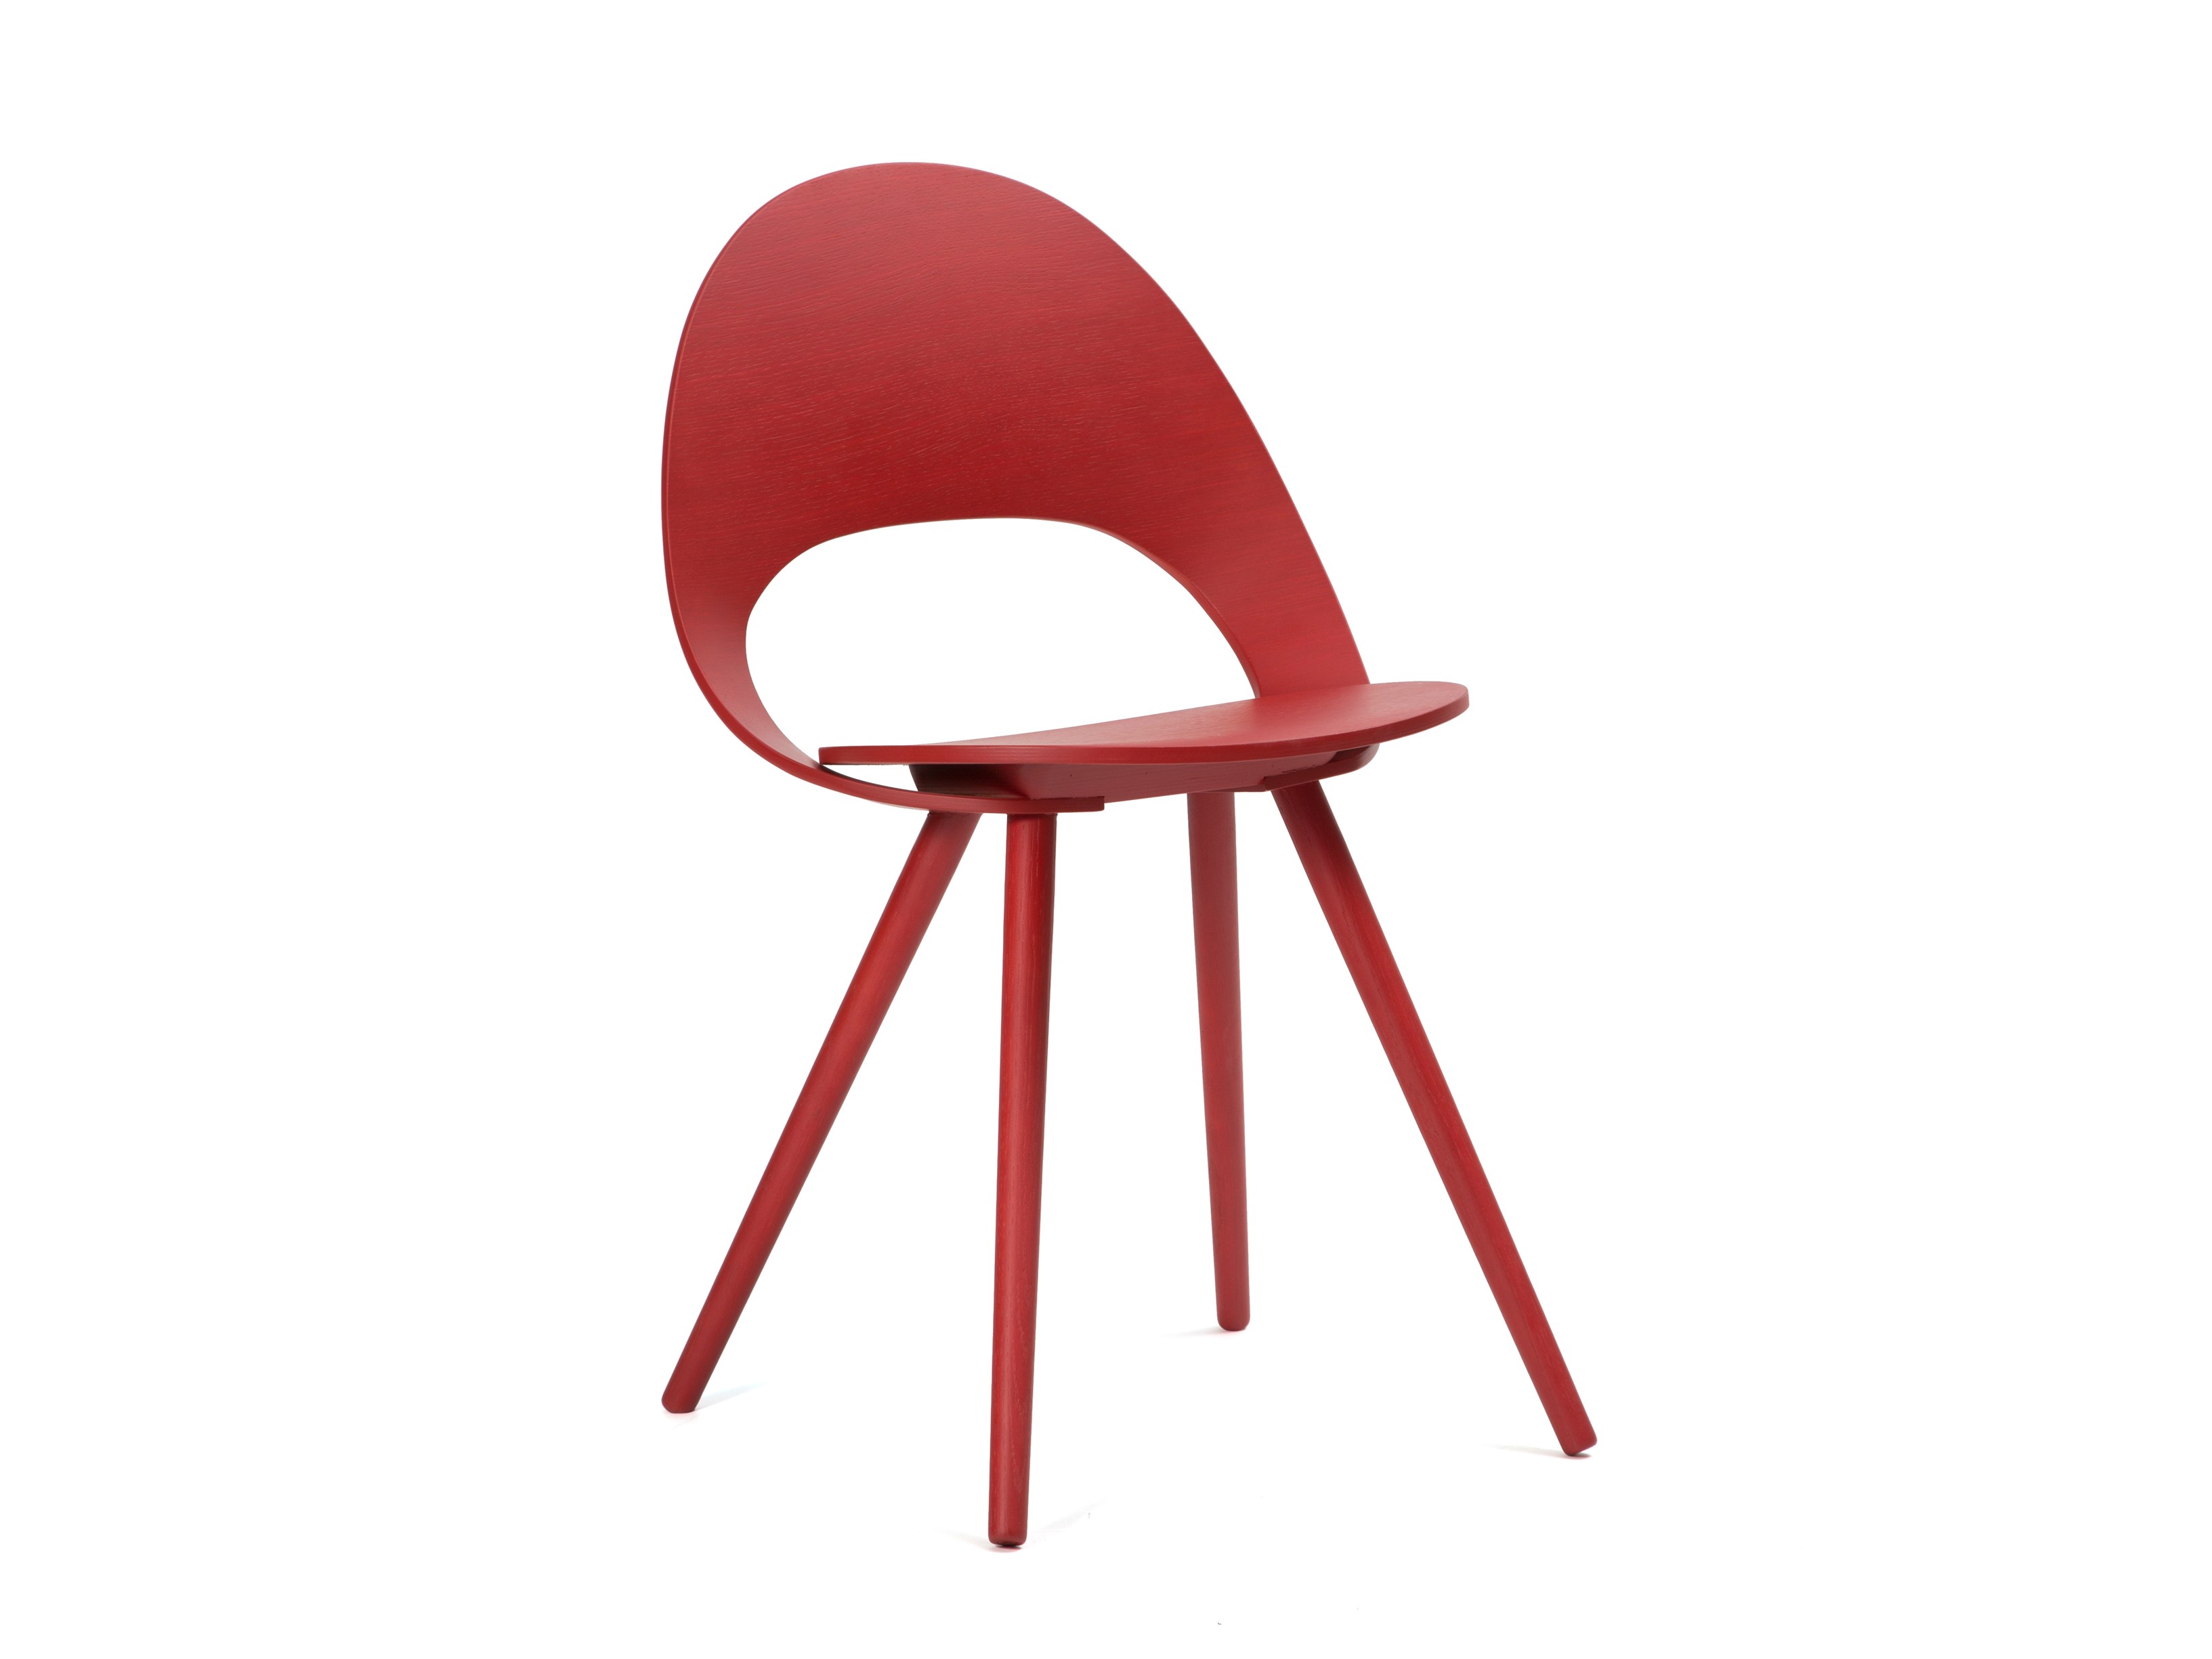 Ono Chair by Susanne Grønlund for Inno Interior Oy